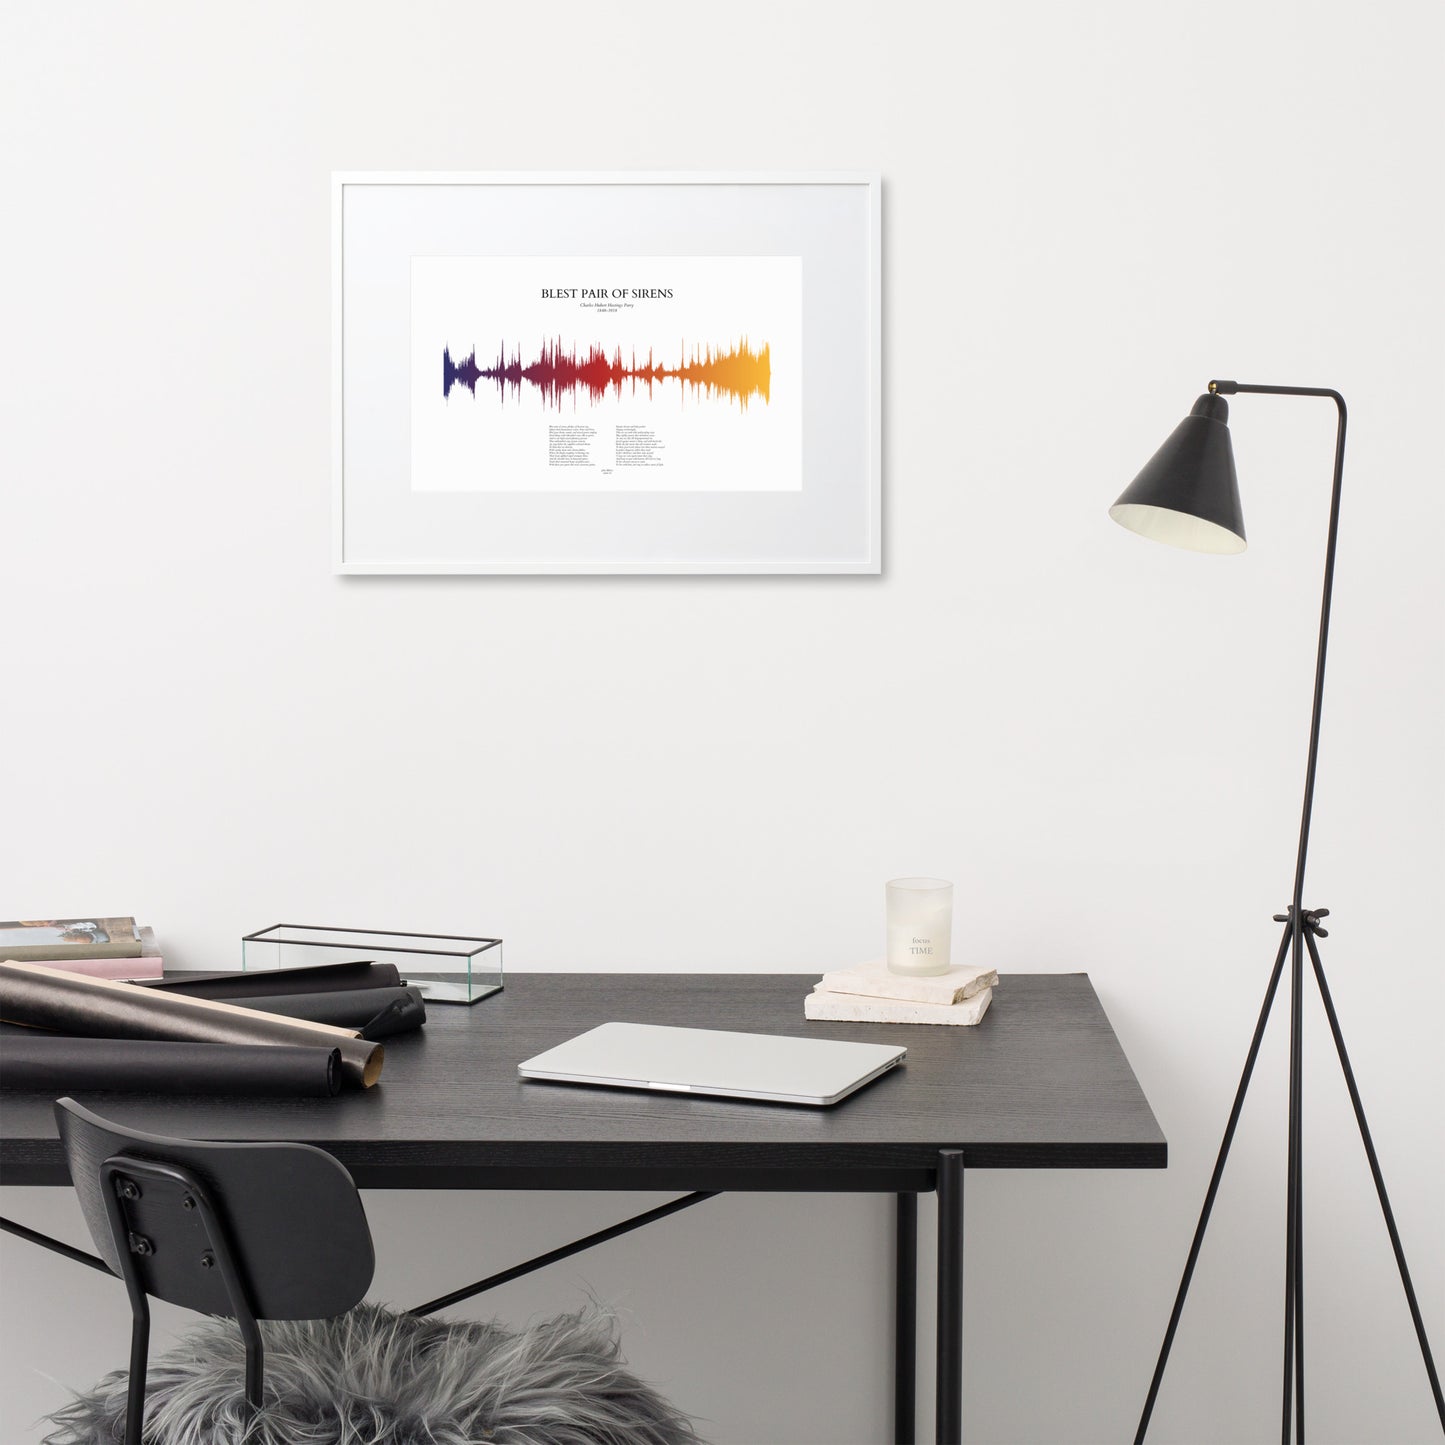 Blest Pair of Sirens - Soundwave Framed Poster